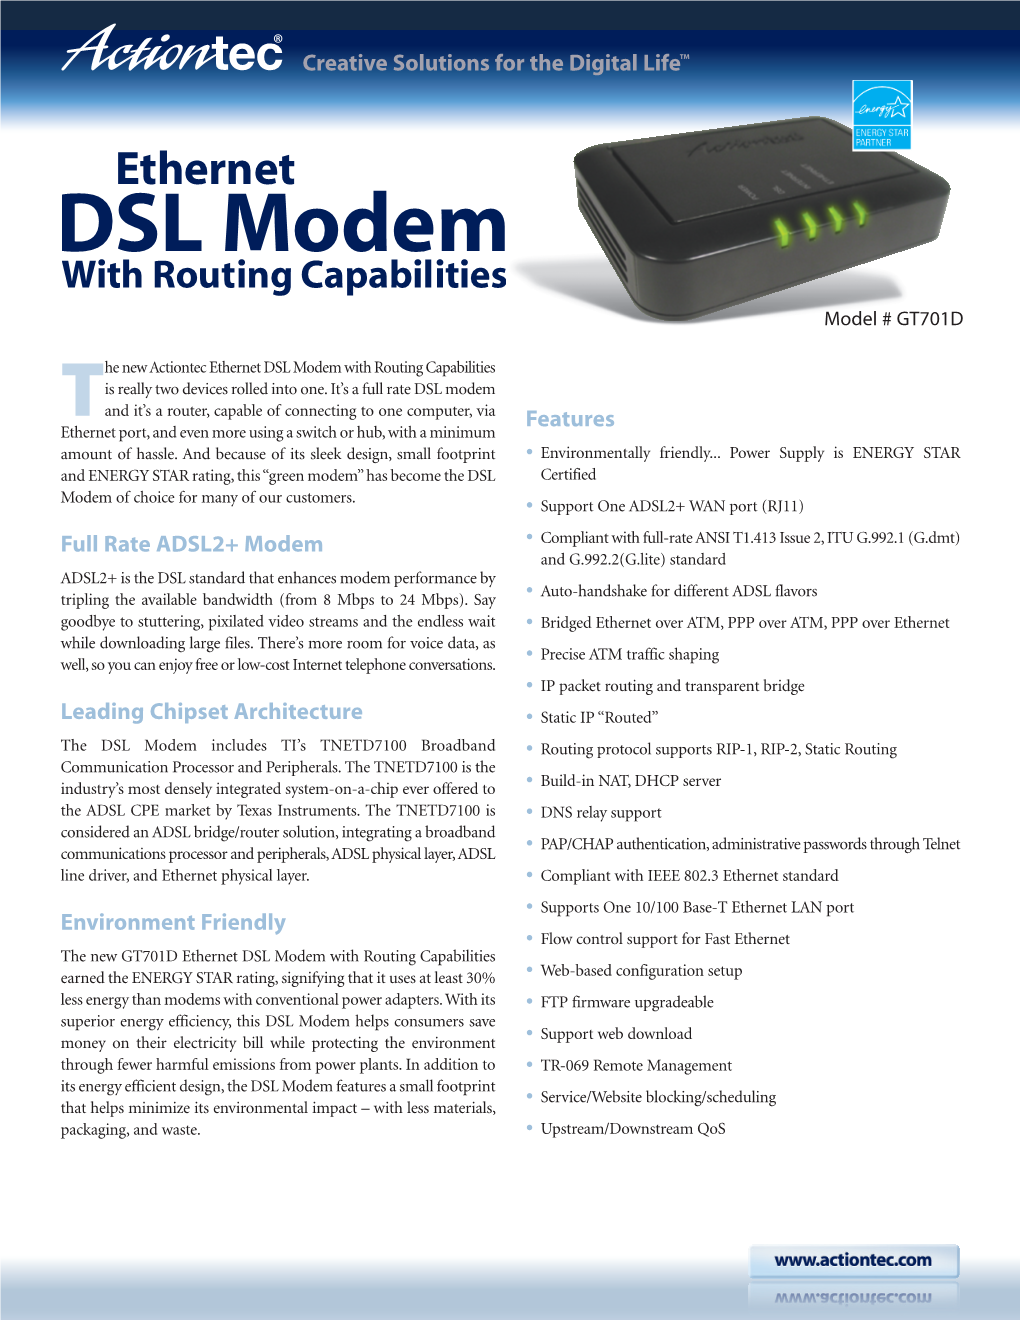 Actiontec GT701D Ethernet DSL Modem Product Datasheet